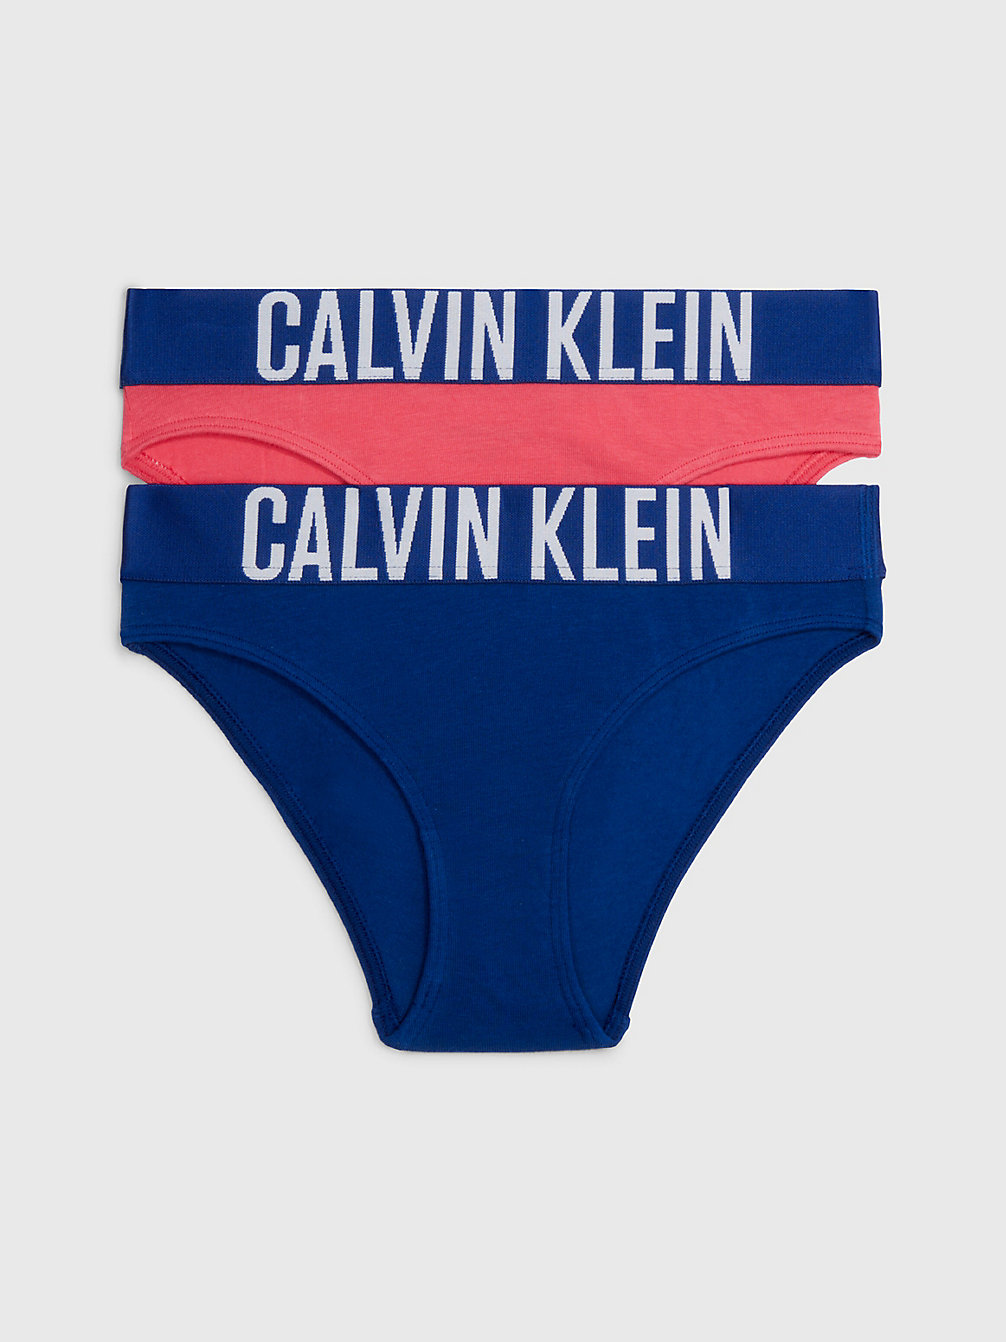 PINKFLASH/BOLDBLUE 2 Pack Girls Bikini Briefs - Intense Power undefined girls Calvin Klein